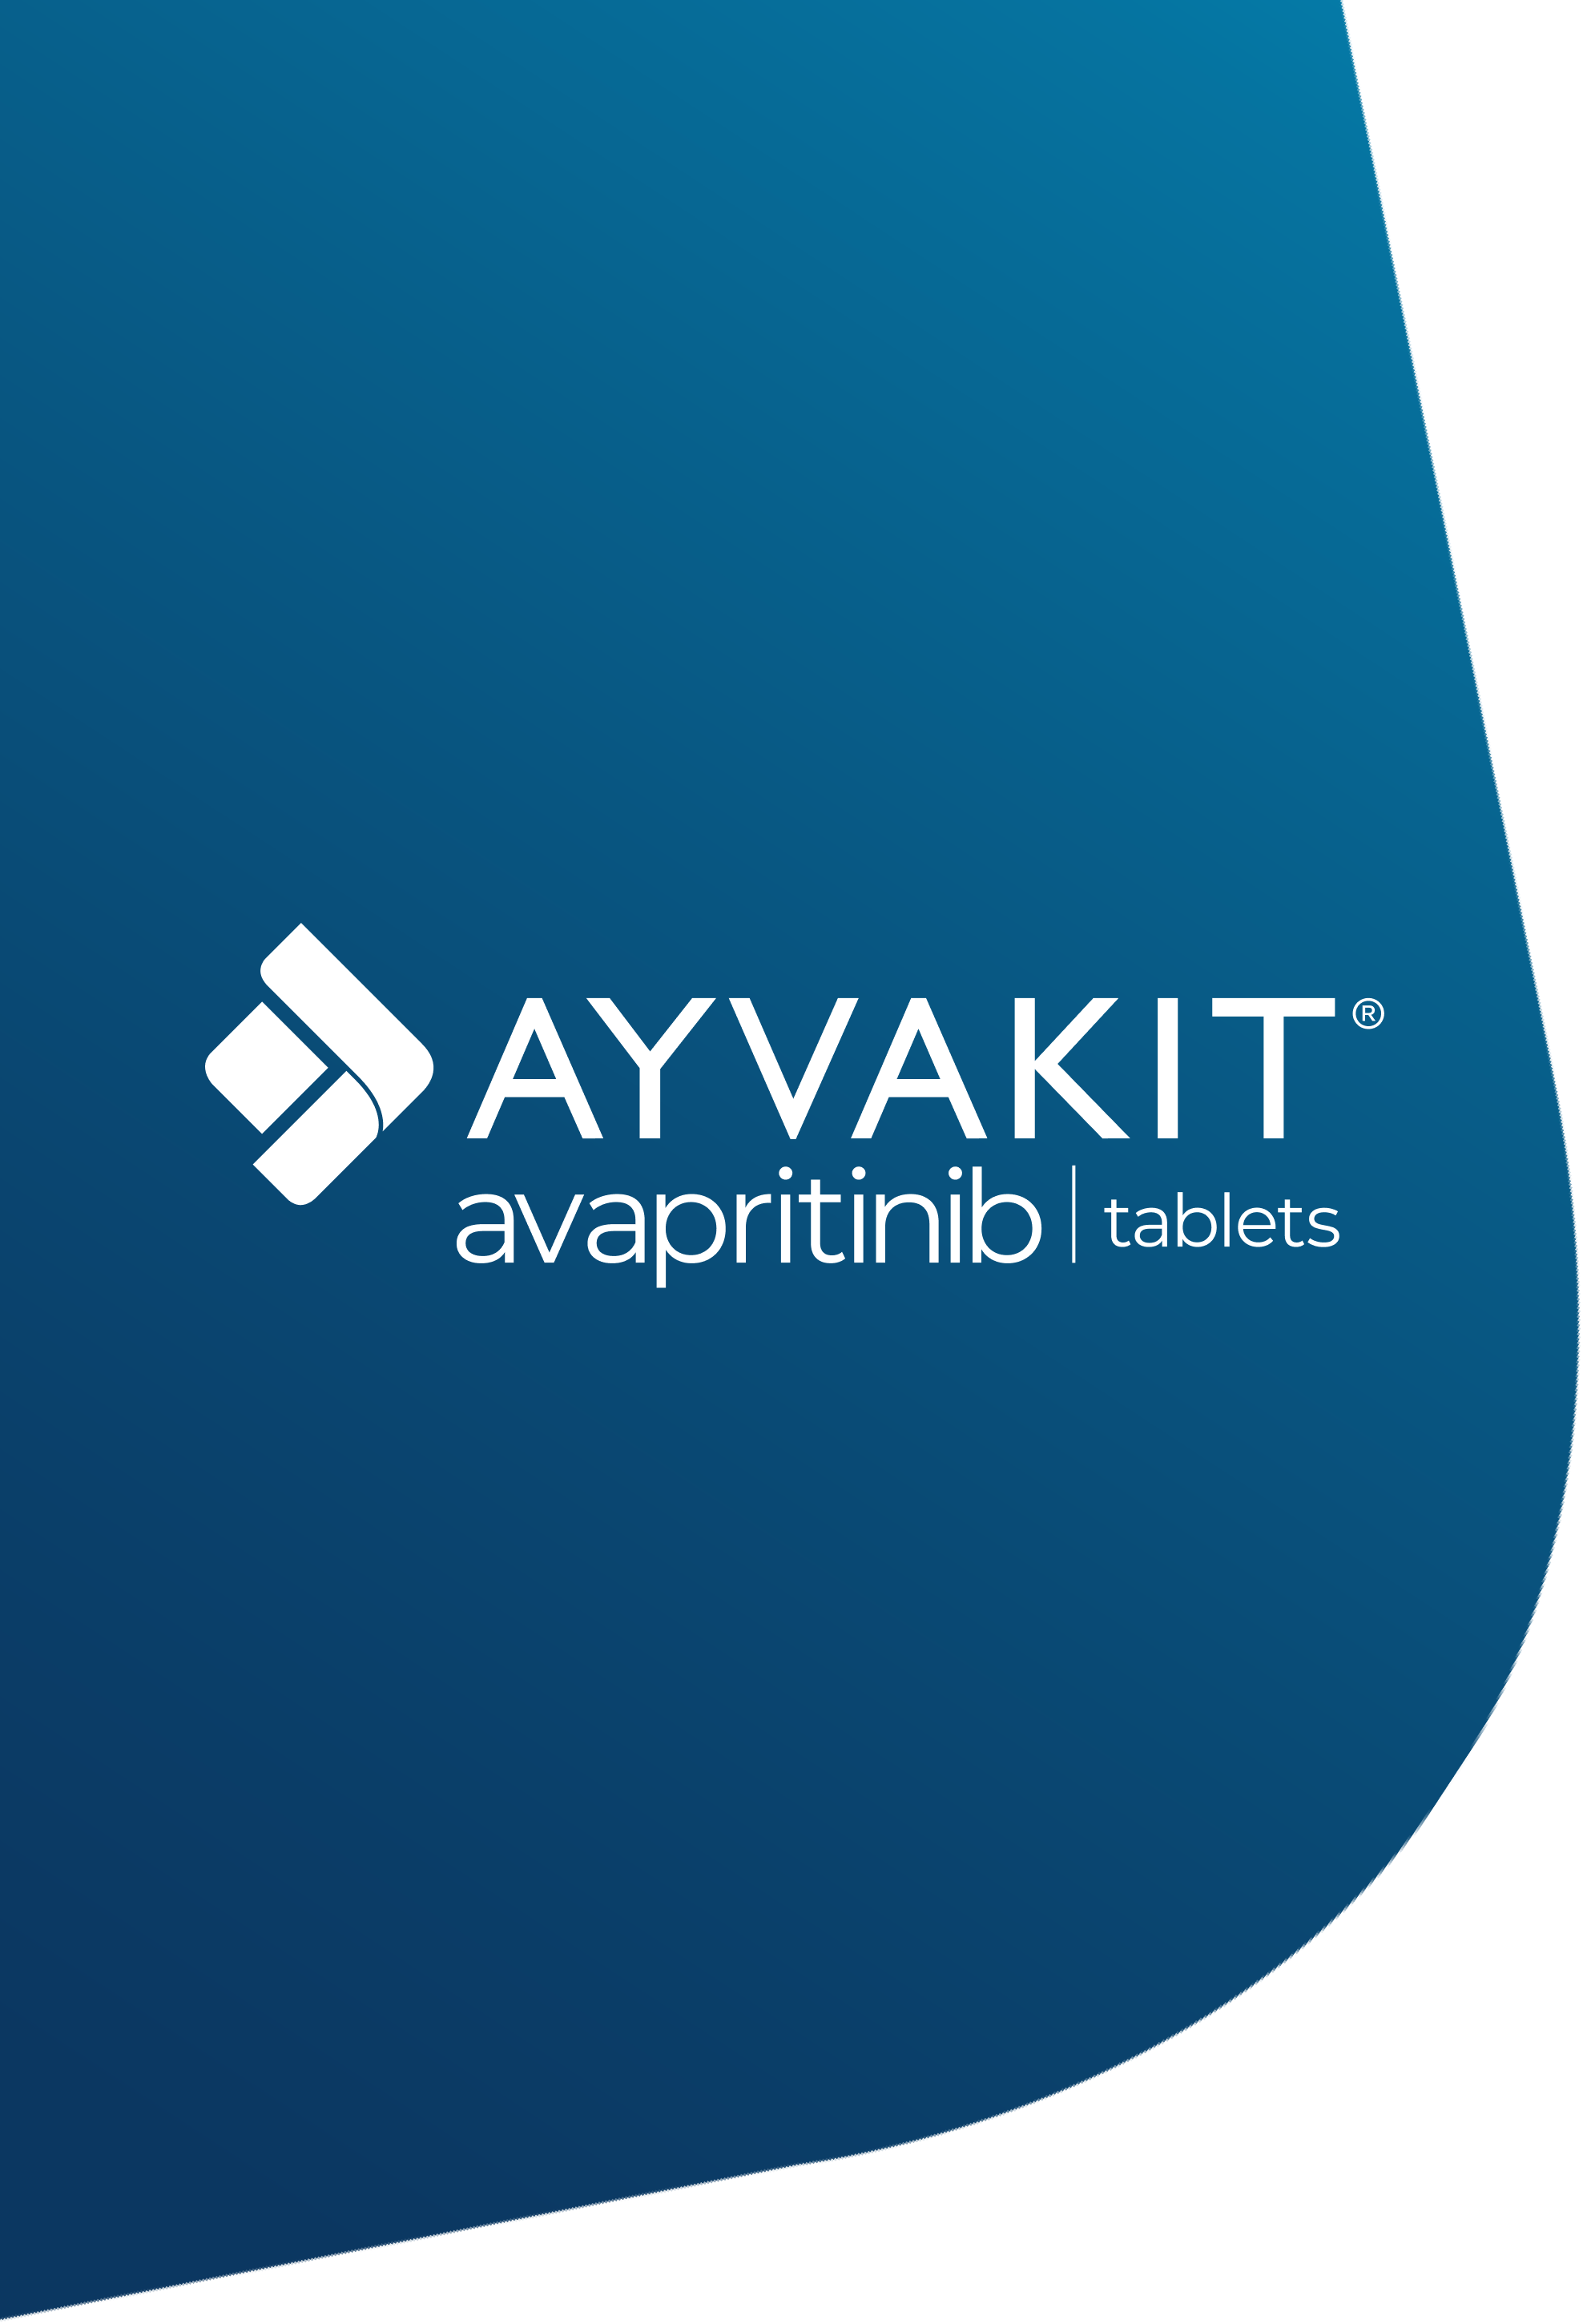 AYVAKIT® (avapritinib) 25 mg white logo